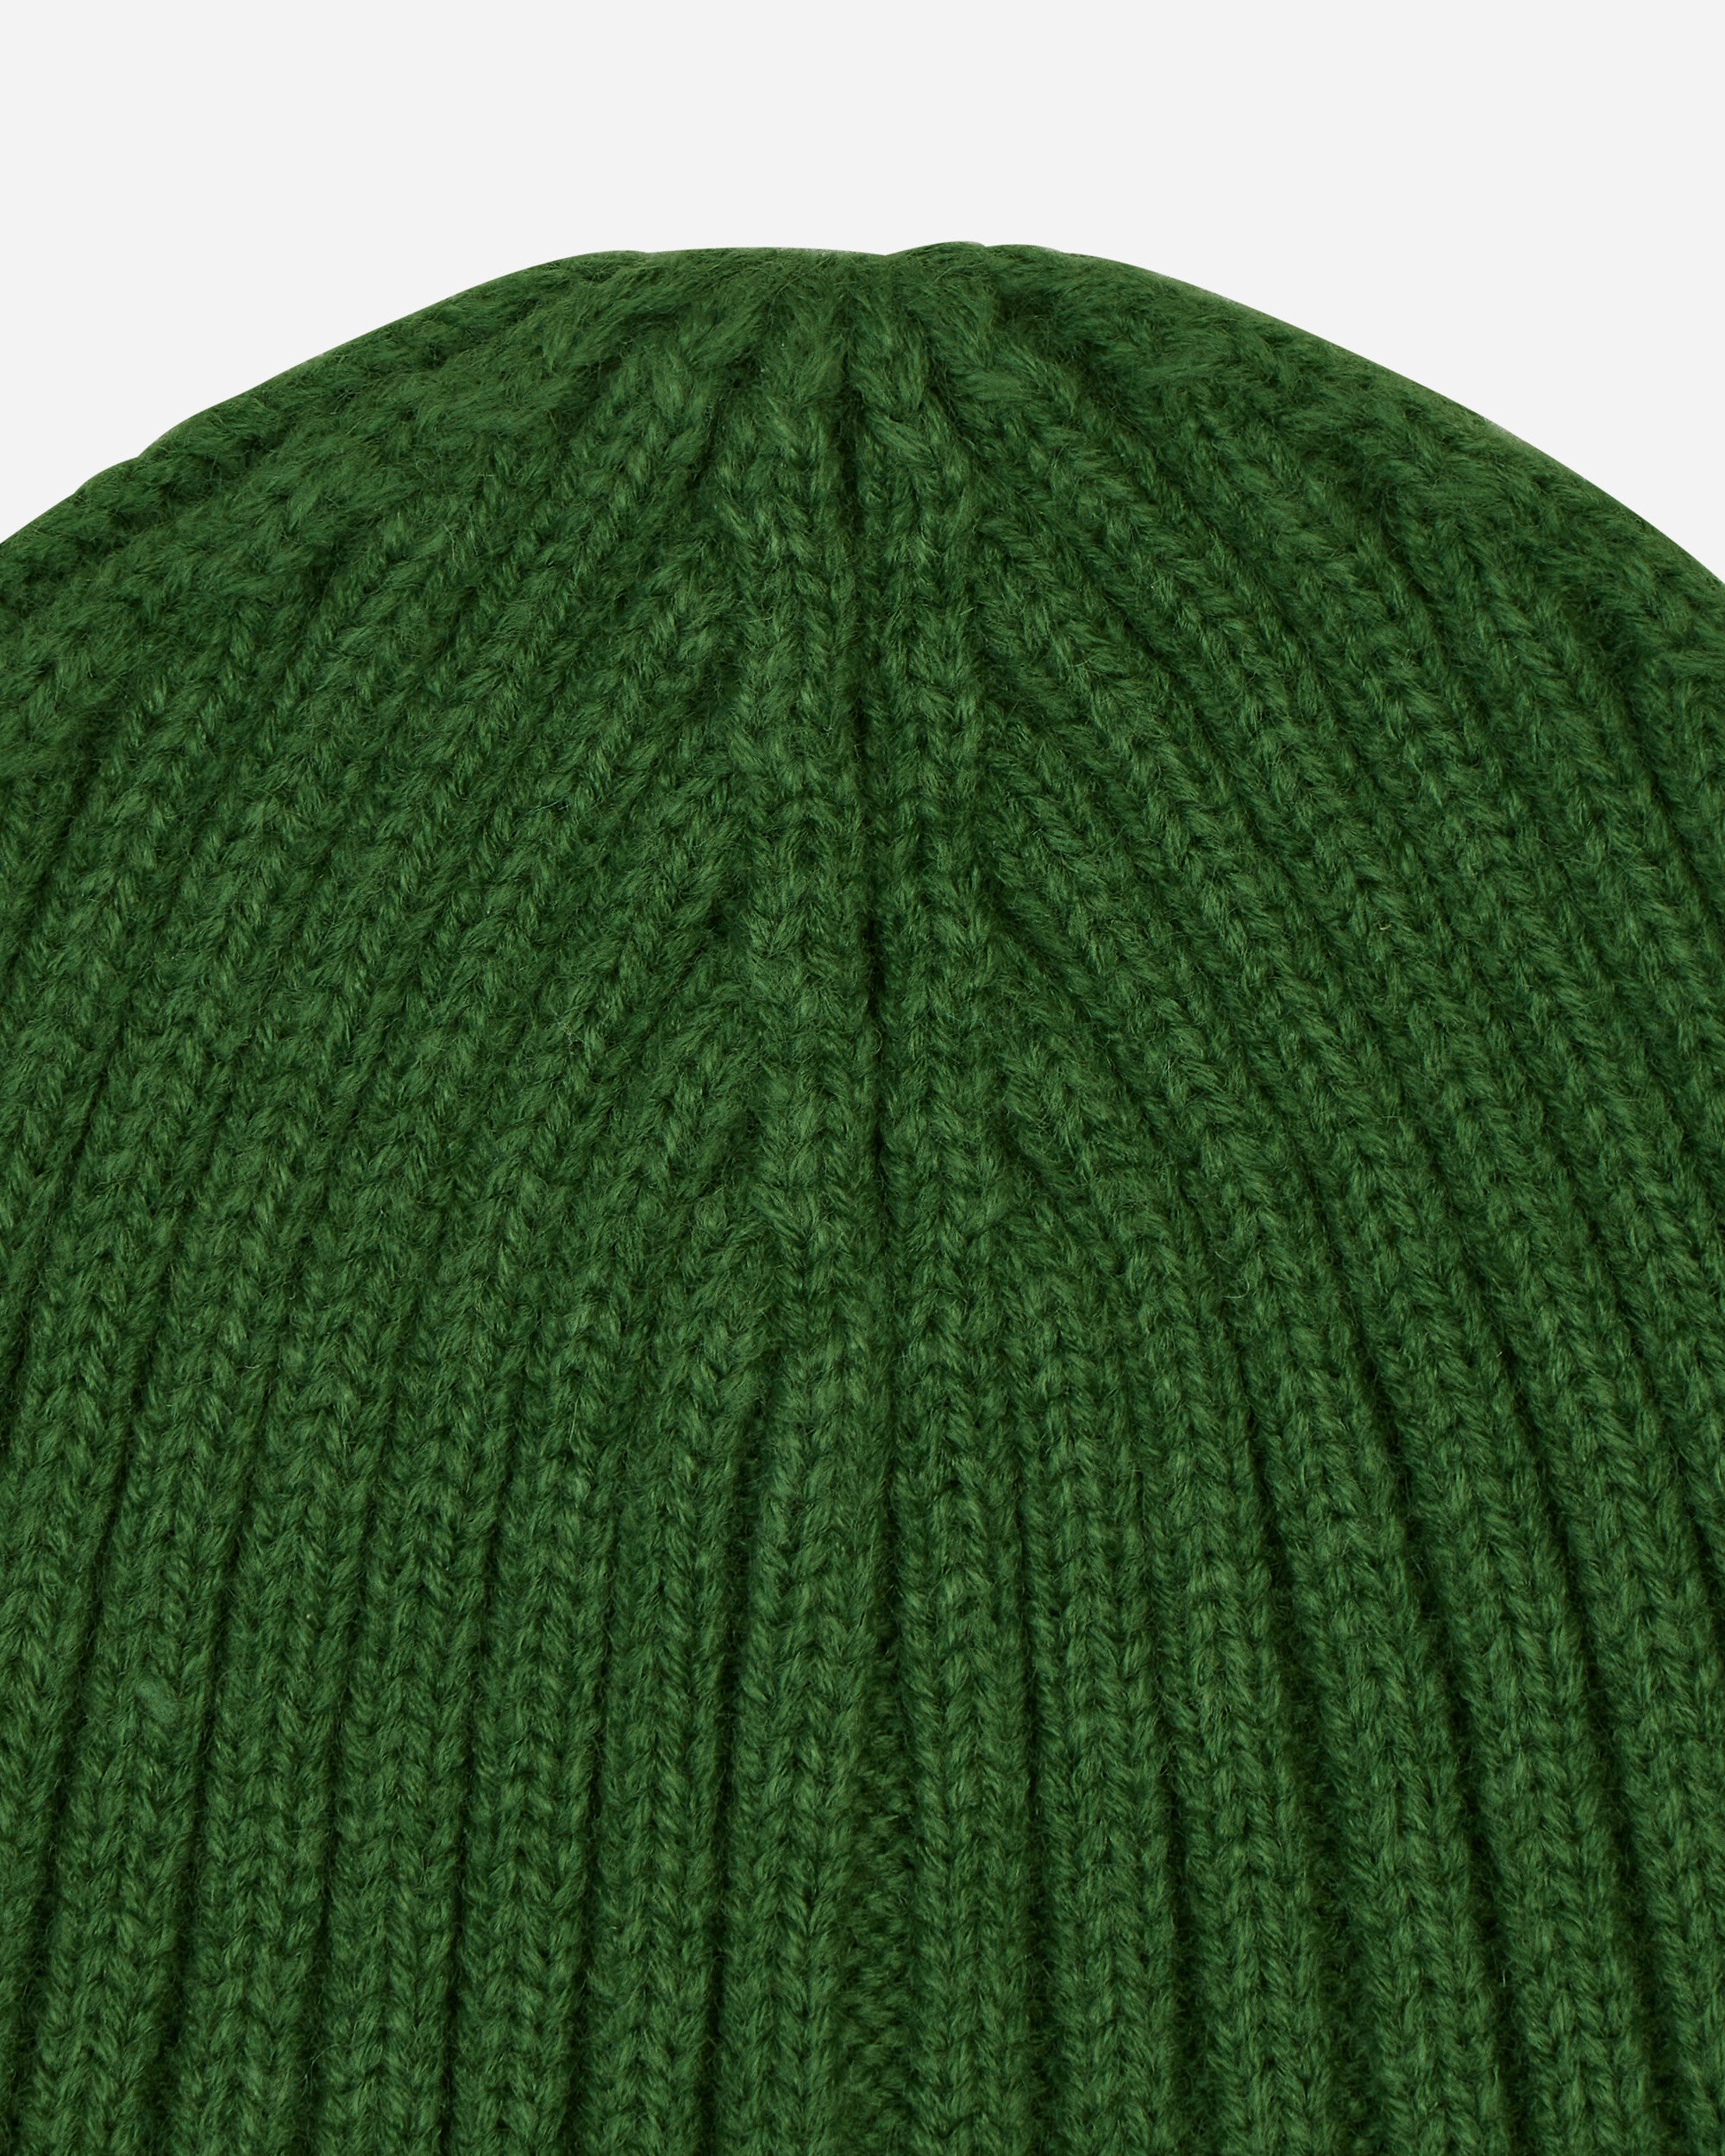 Dime Classic Fold Beanie Ivy Green Hats Beanies DIMEHO2347 IVY